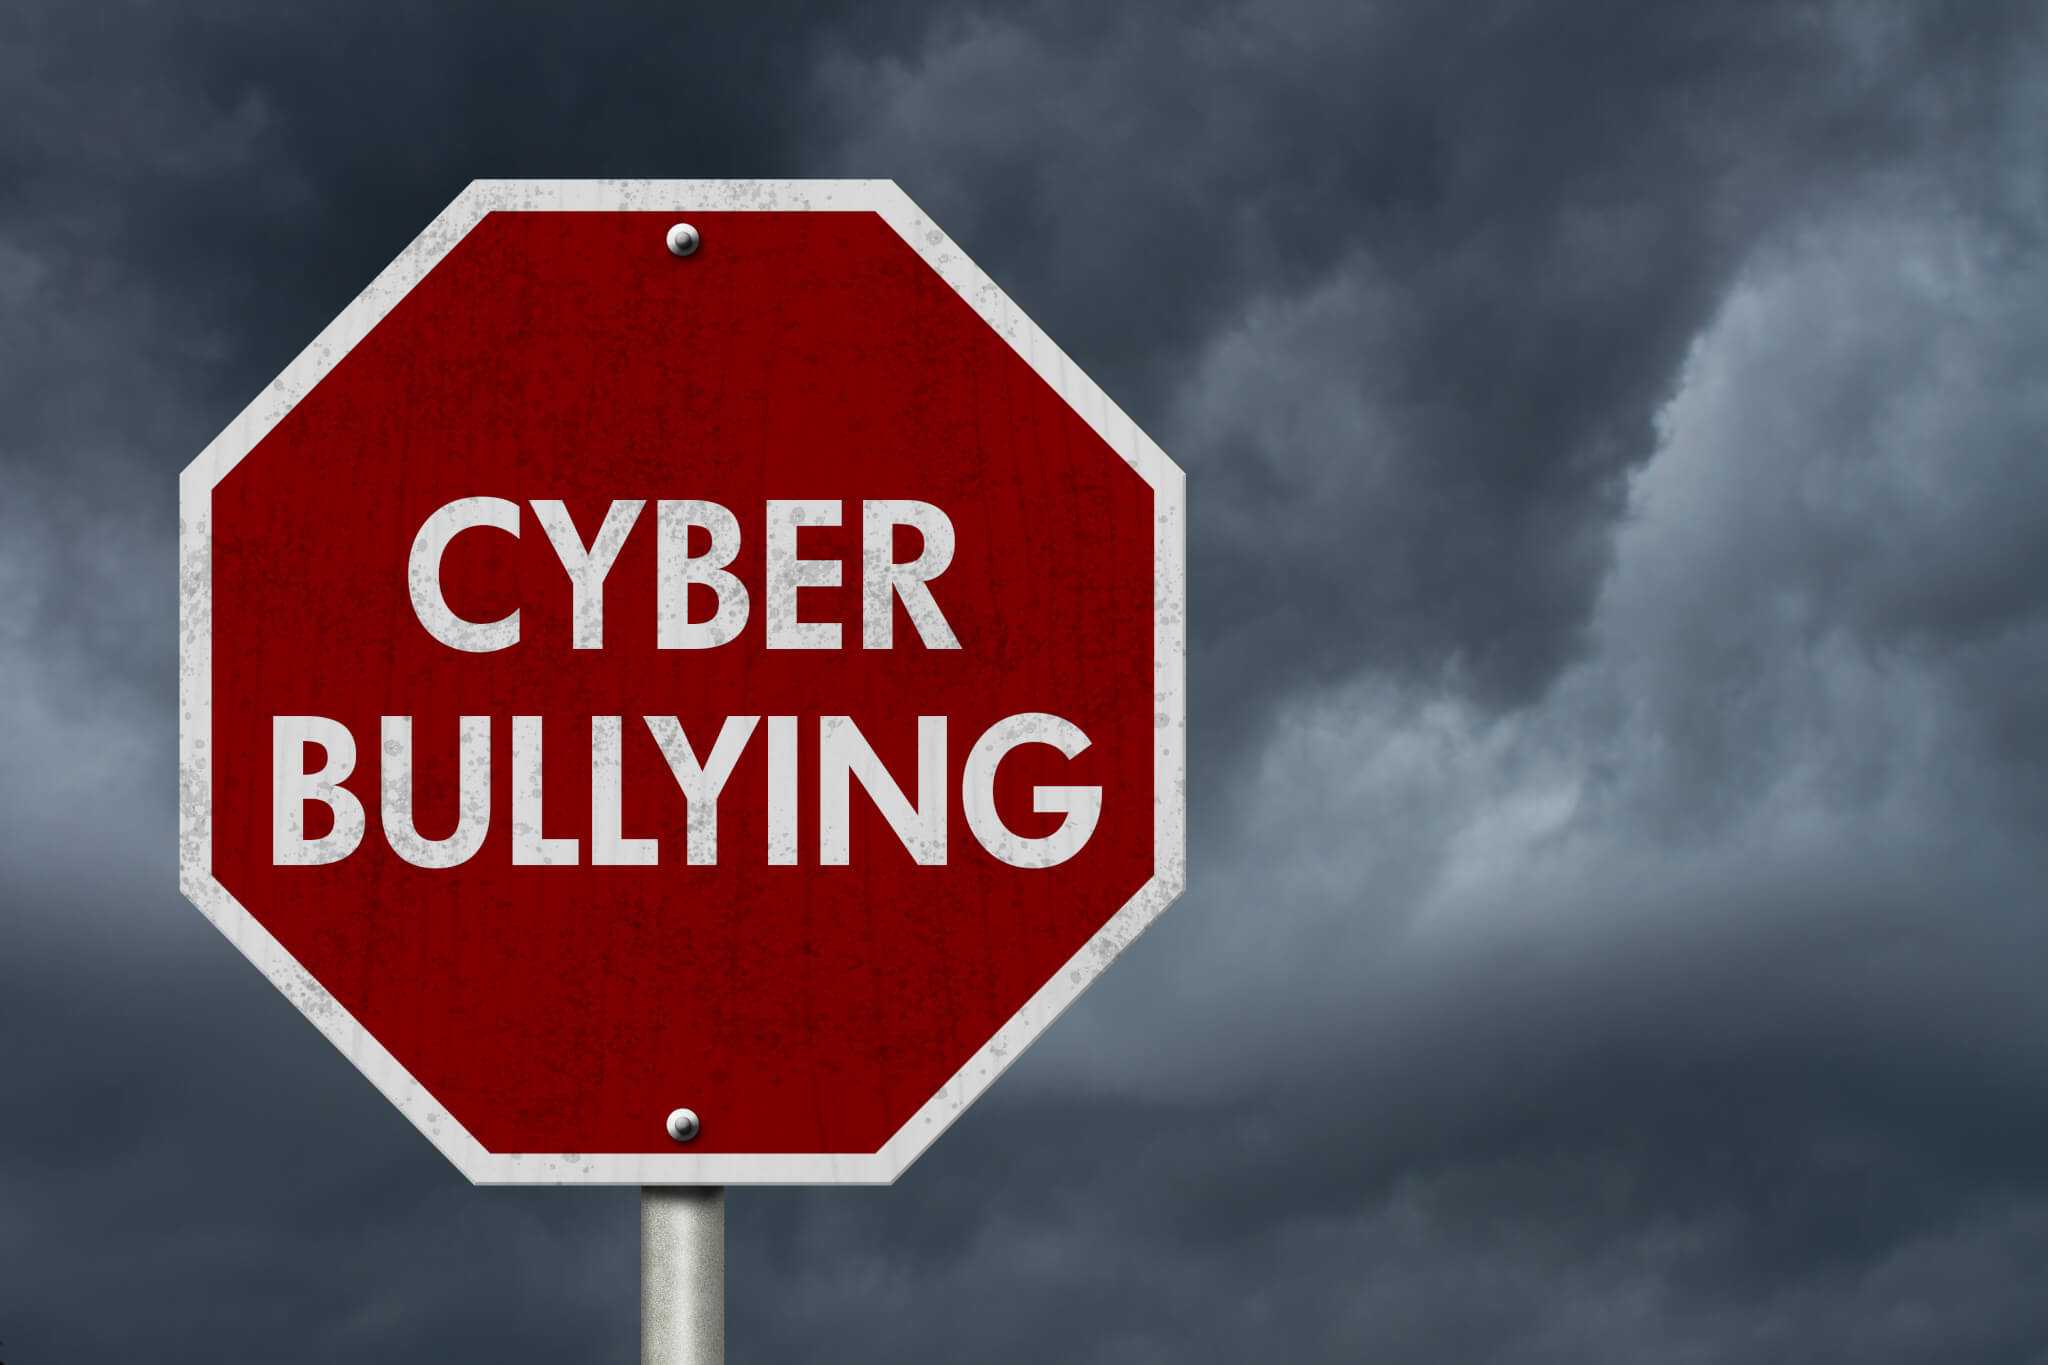 presentation on bullying and cyberbullying